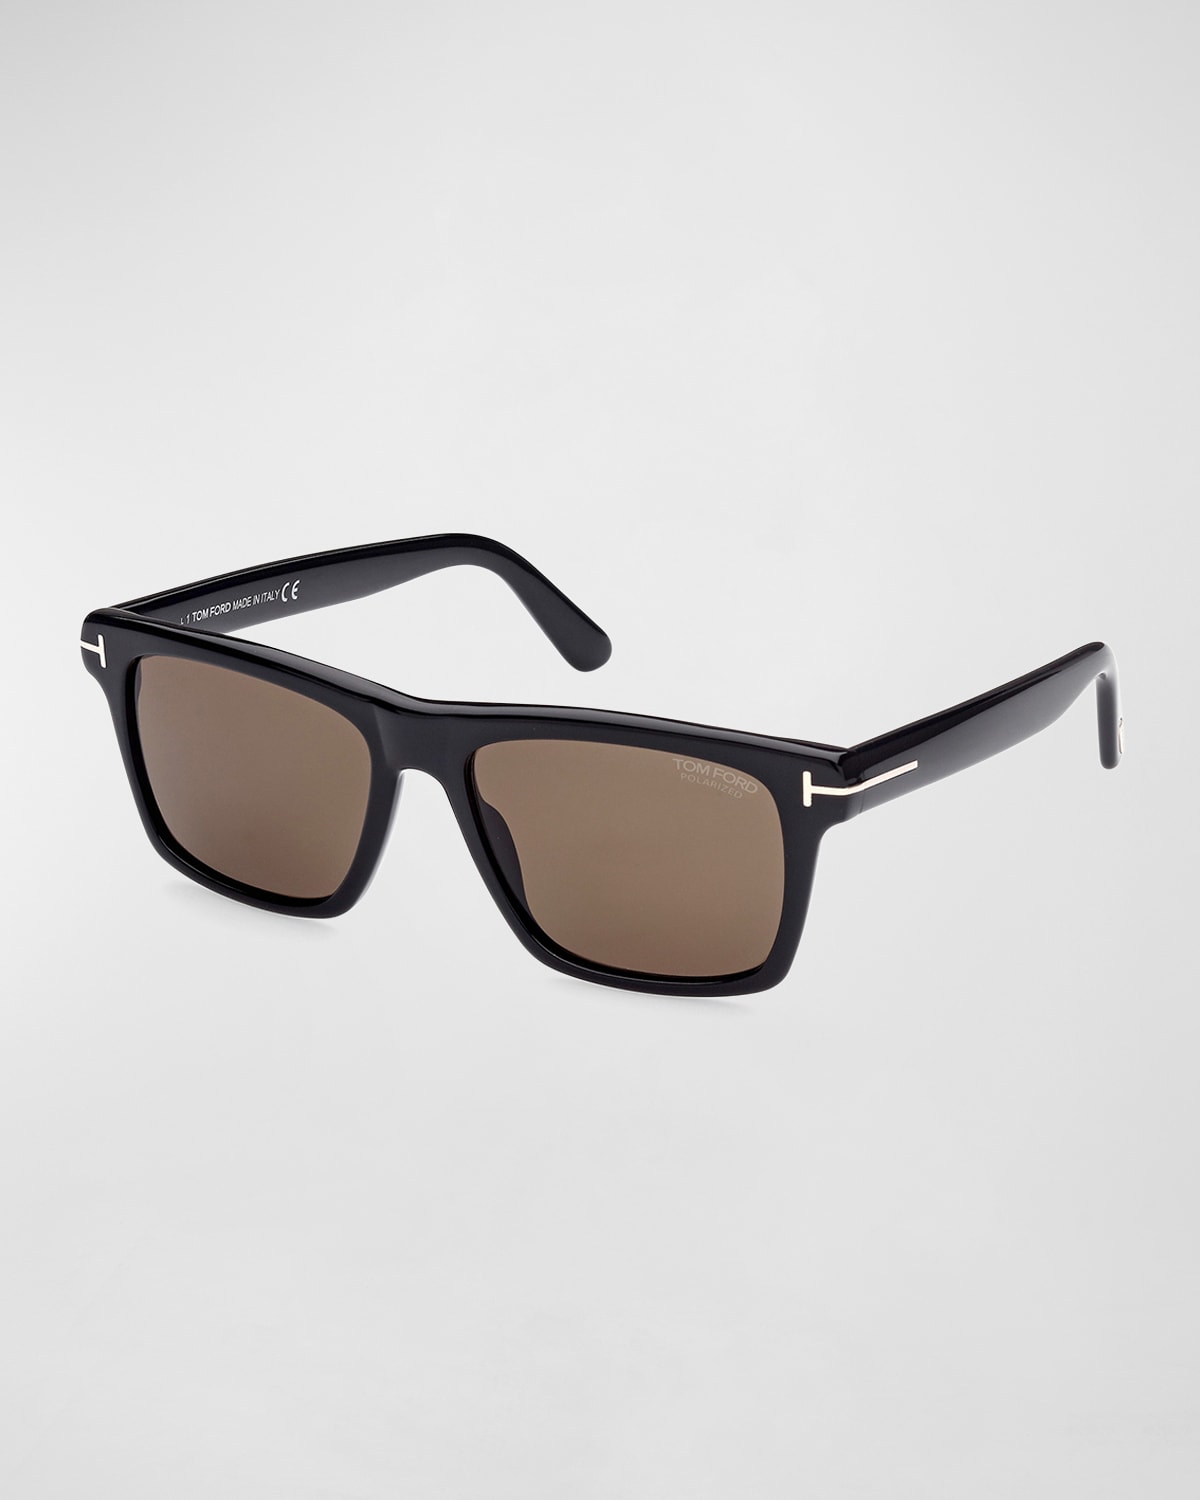 Tom Ford Sunglasses | Neiman Marcus